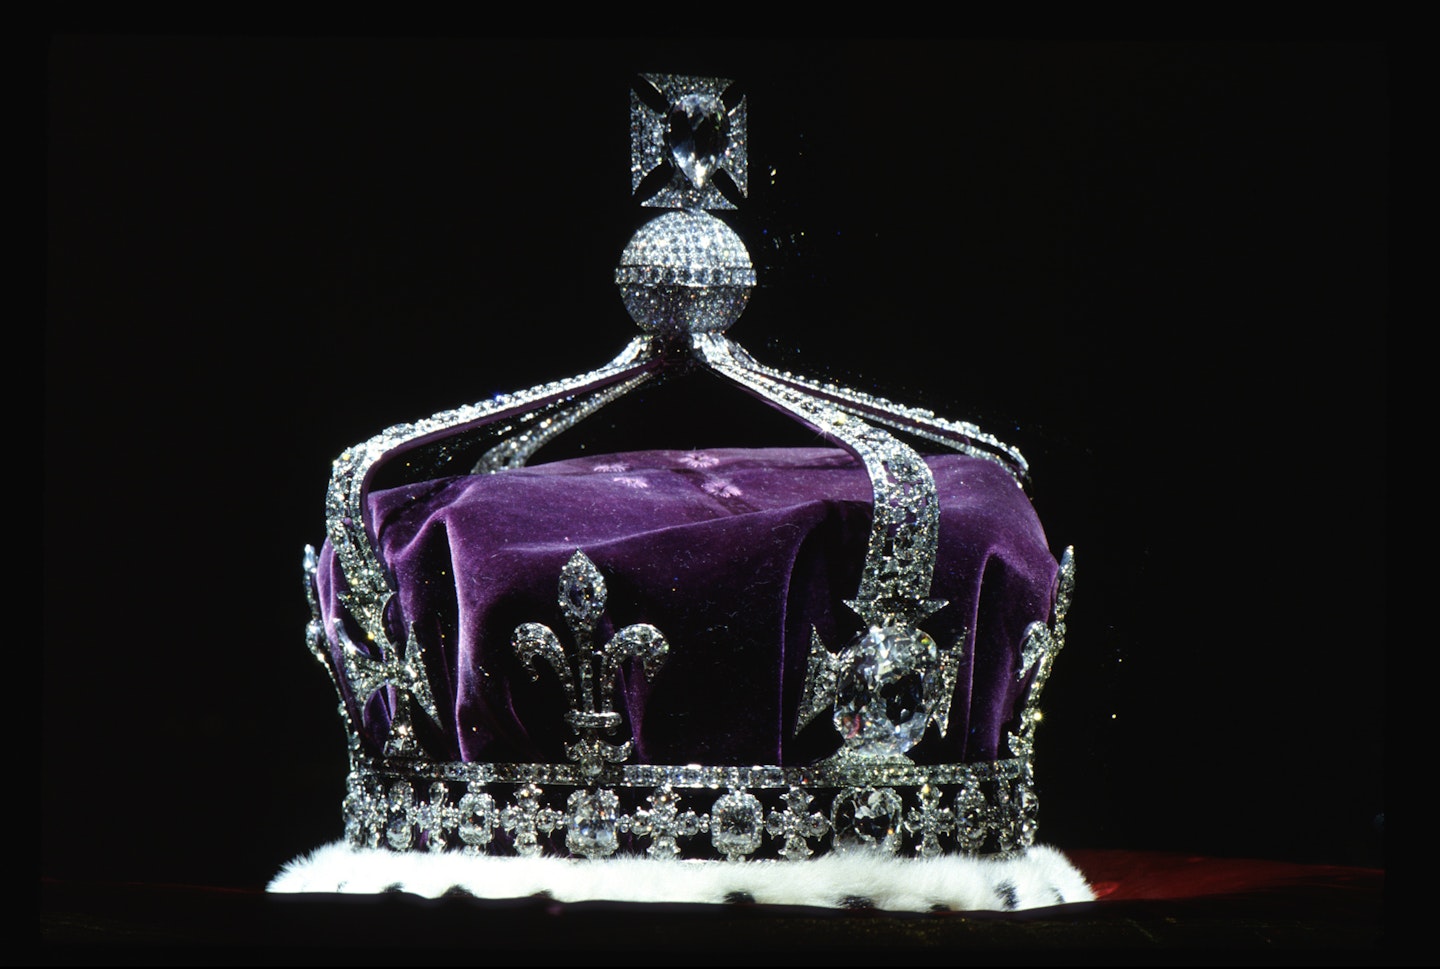 The queen mother's crown